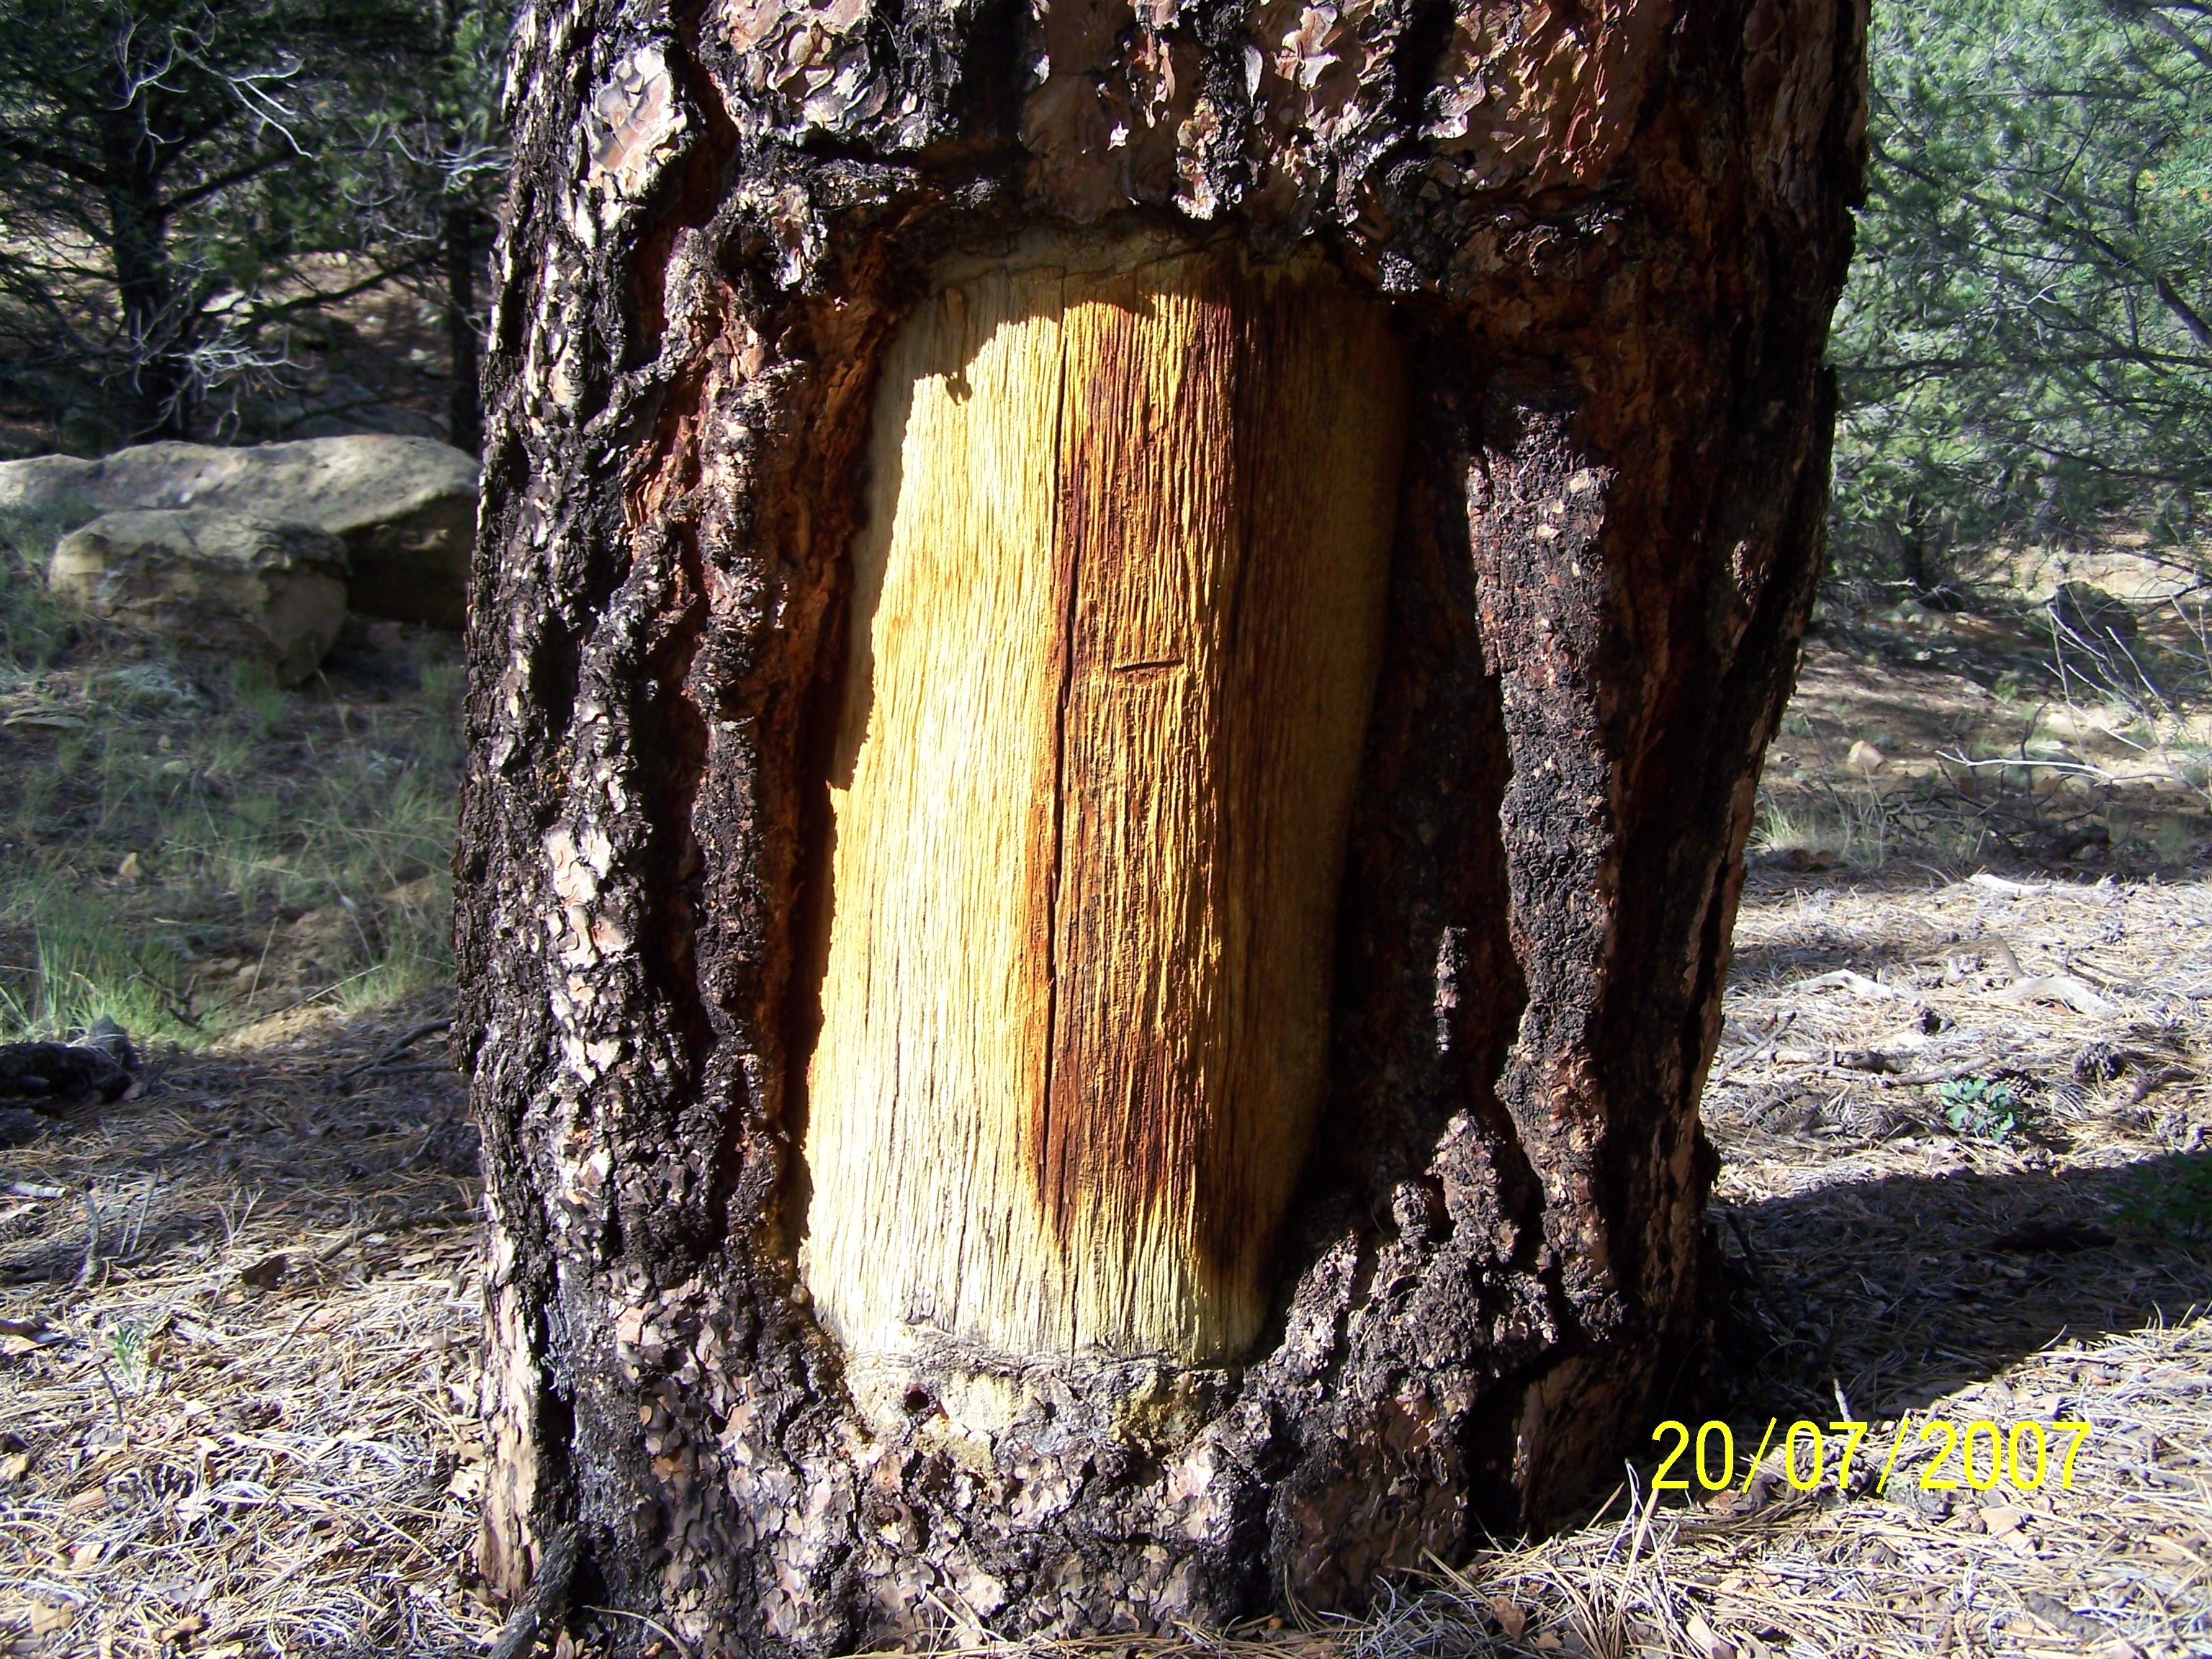 Feature 27 (peeled tree), July 2007